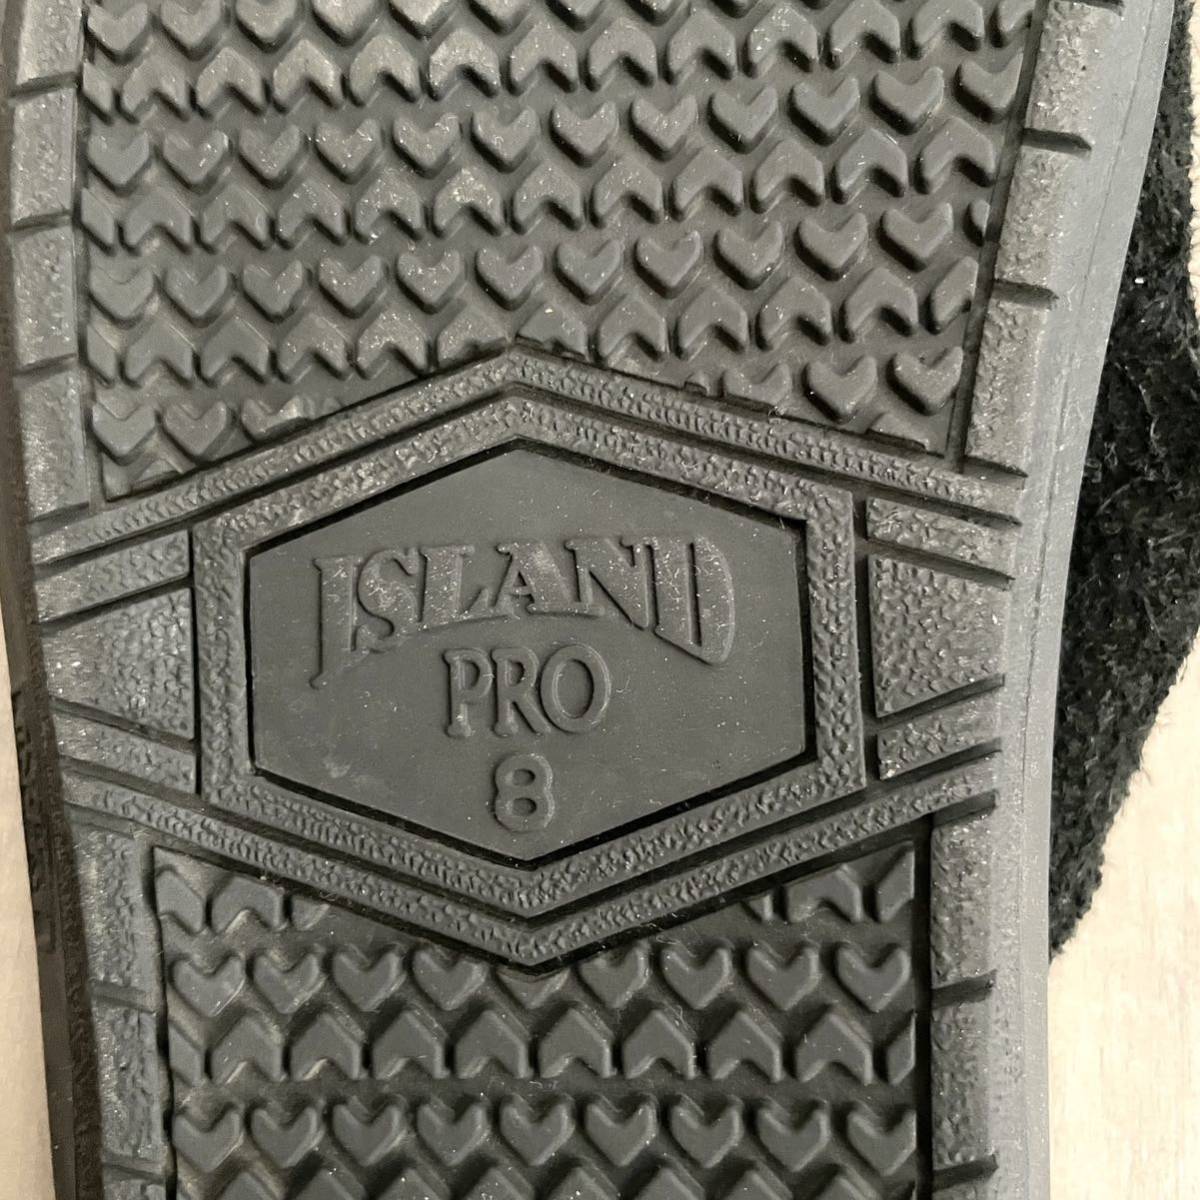 【ISLAND SLIPPER】 アイスランドスリッパ サンダル 夏靴 レザー ブラック 黒 26.0_画像8